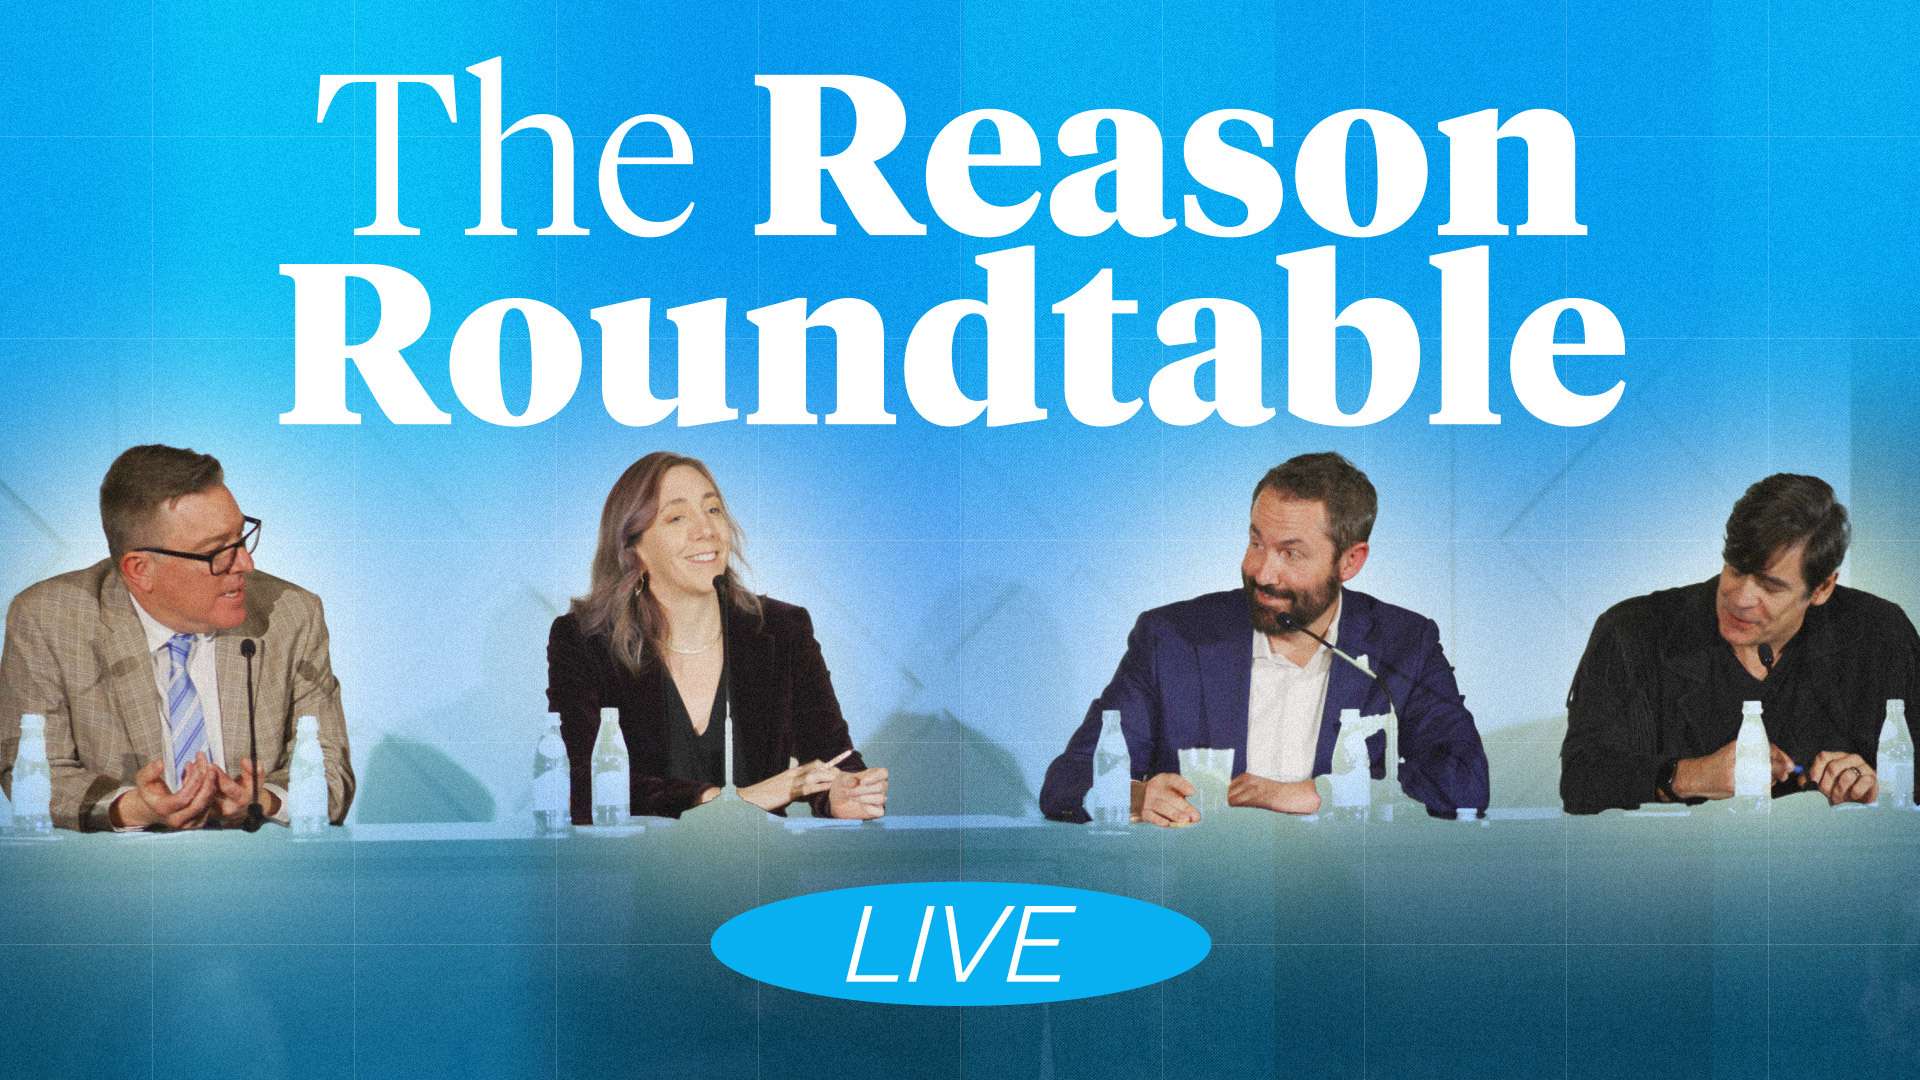 A bonus ‘Reason Roundtable’. Live from Boston!